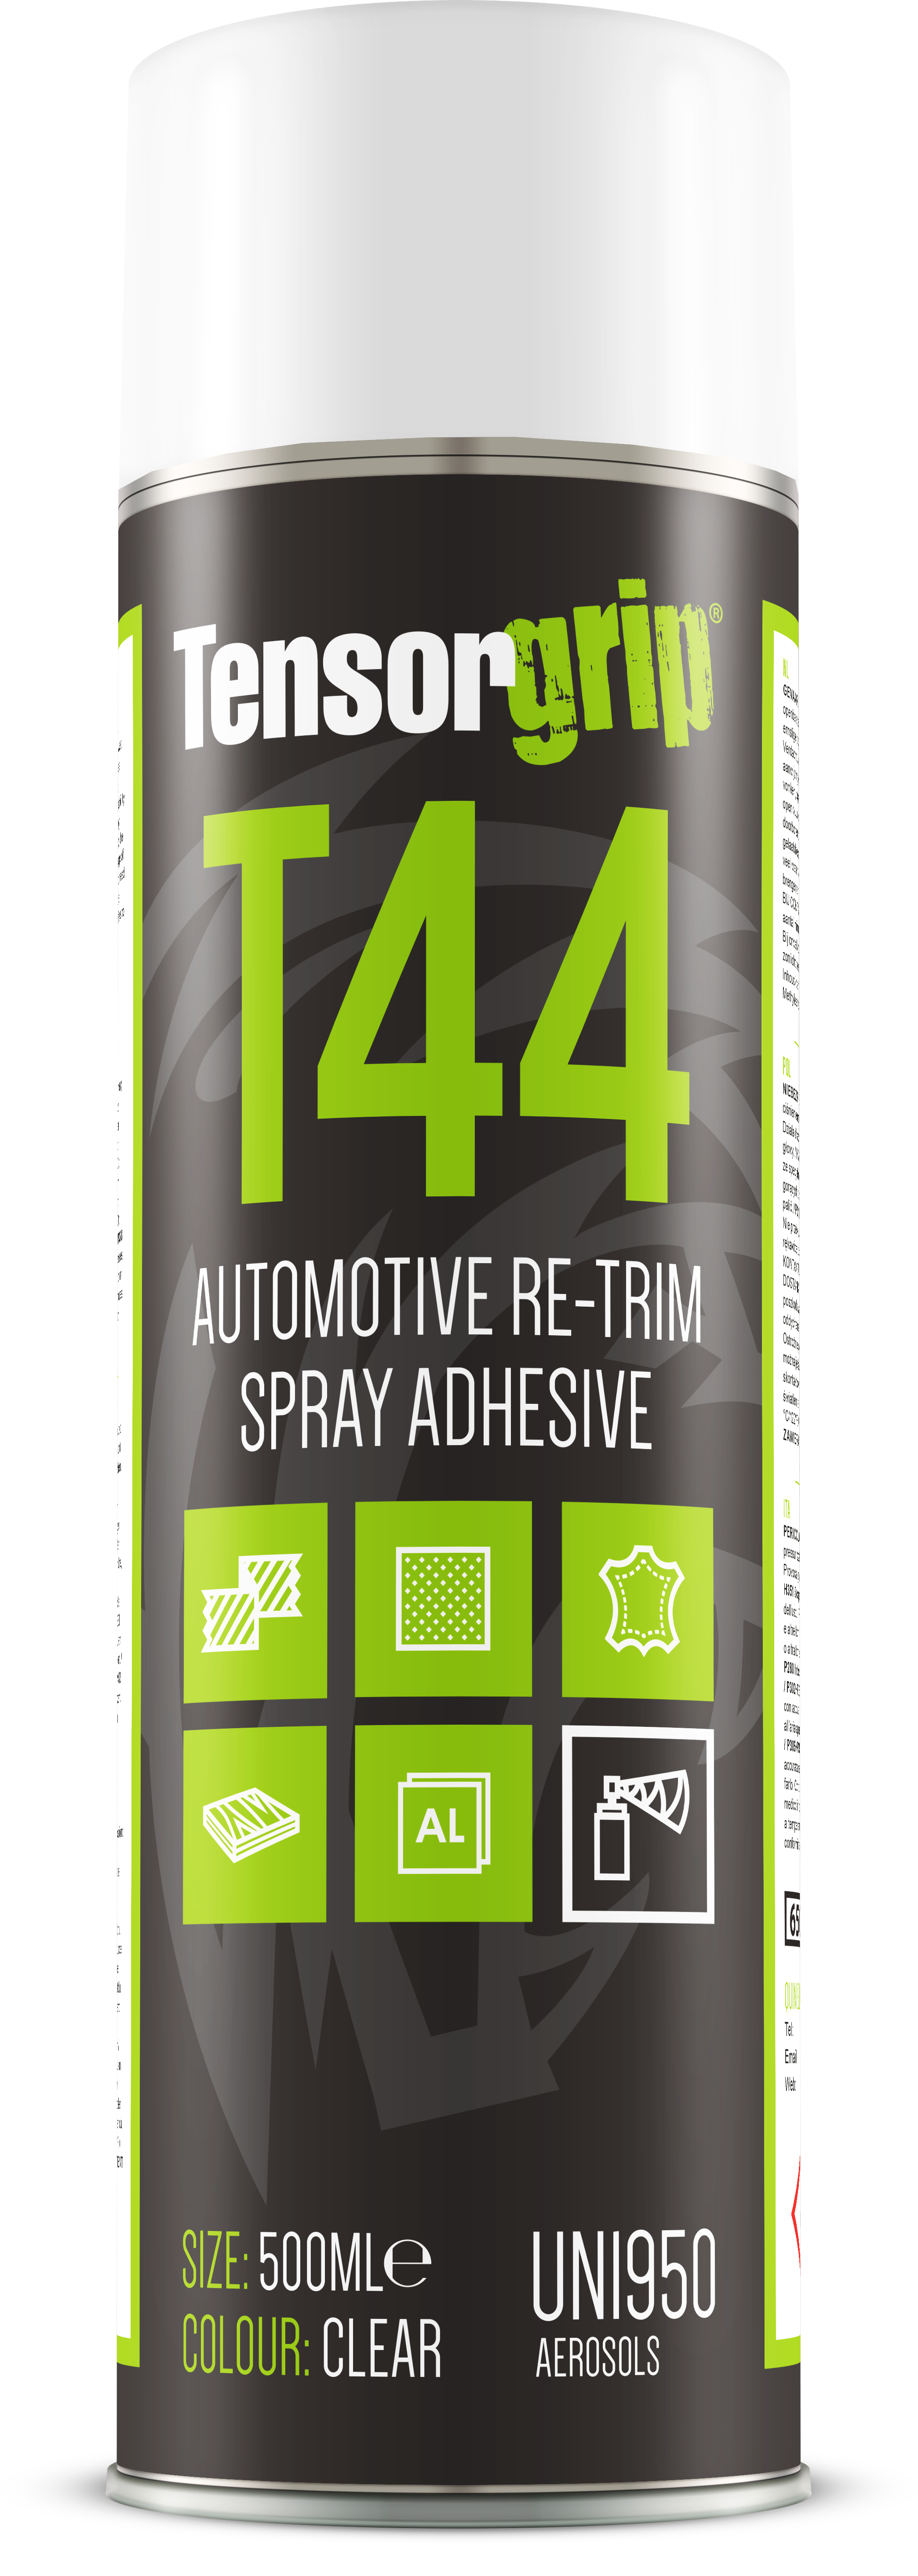 TensorGrip T44 Automotive Re-Trim Spray Adhesive